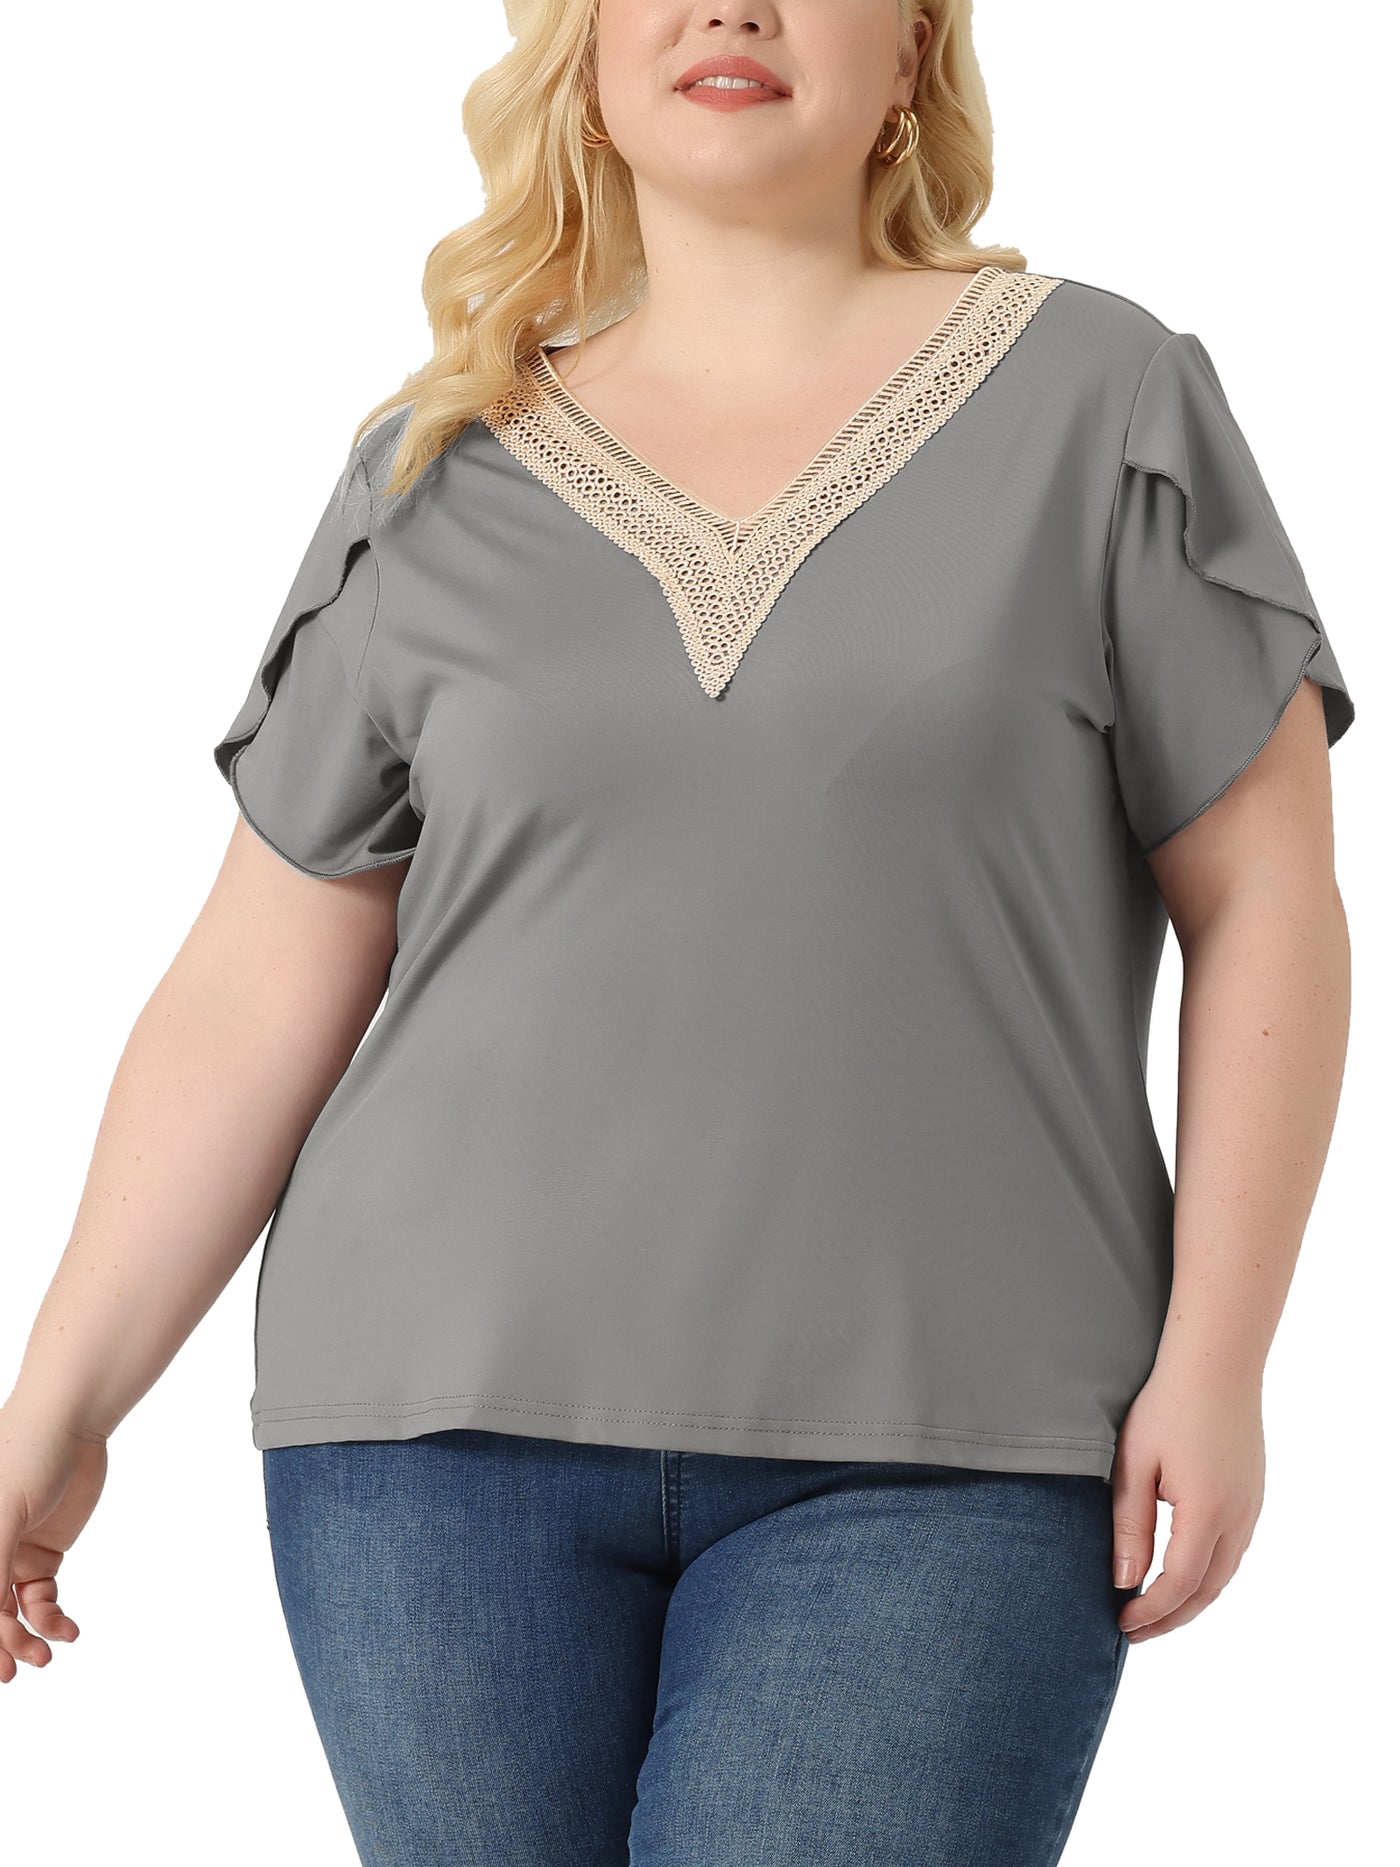 Bublédon Plus Size Summer T-Shirts For Women Casual Lace V Neck Short Sleeve Tunics Basic Tops Blouses